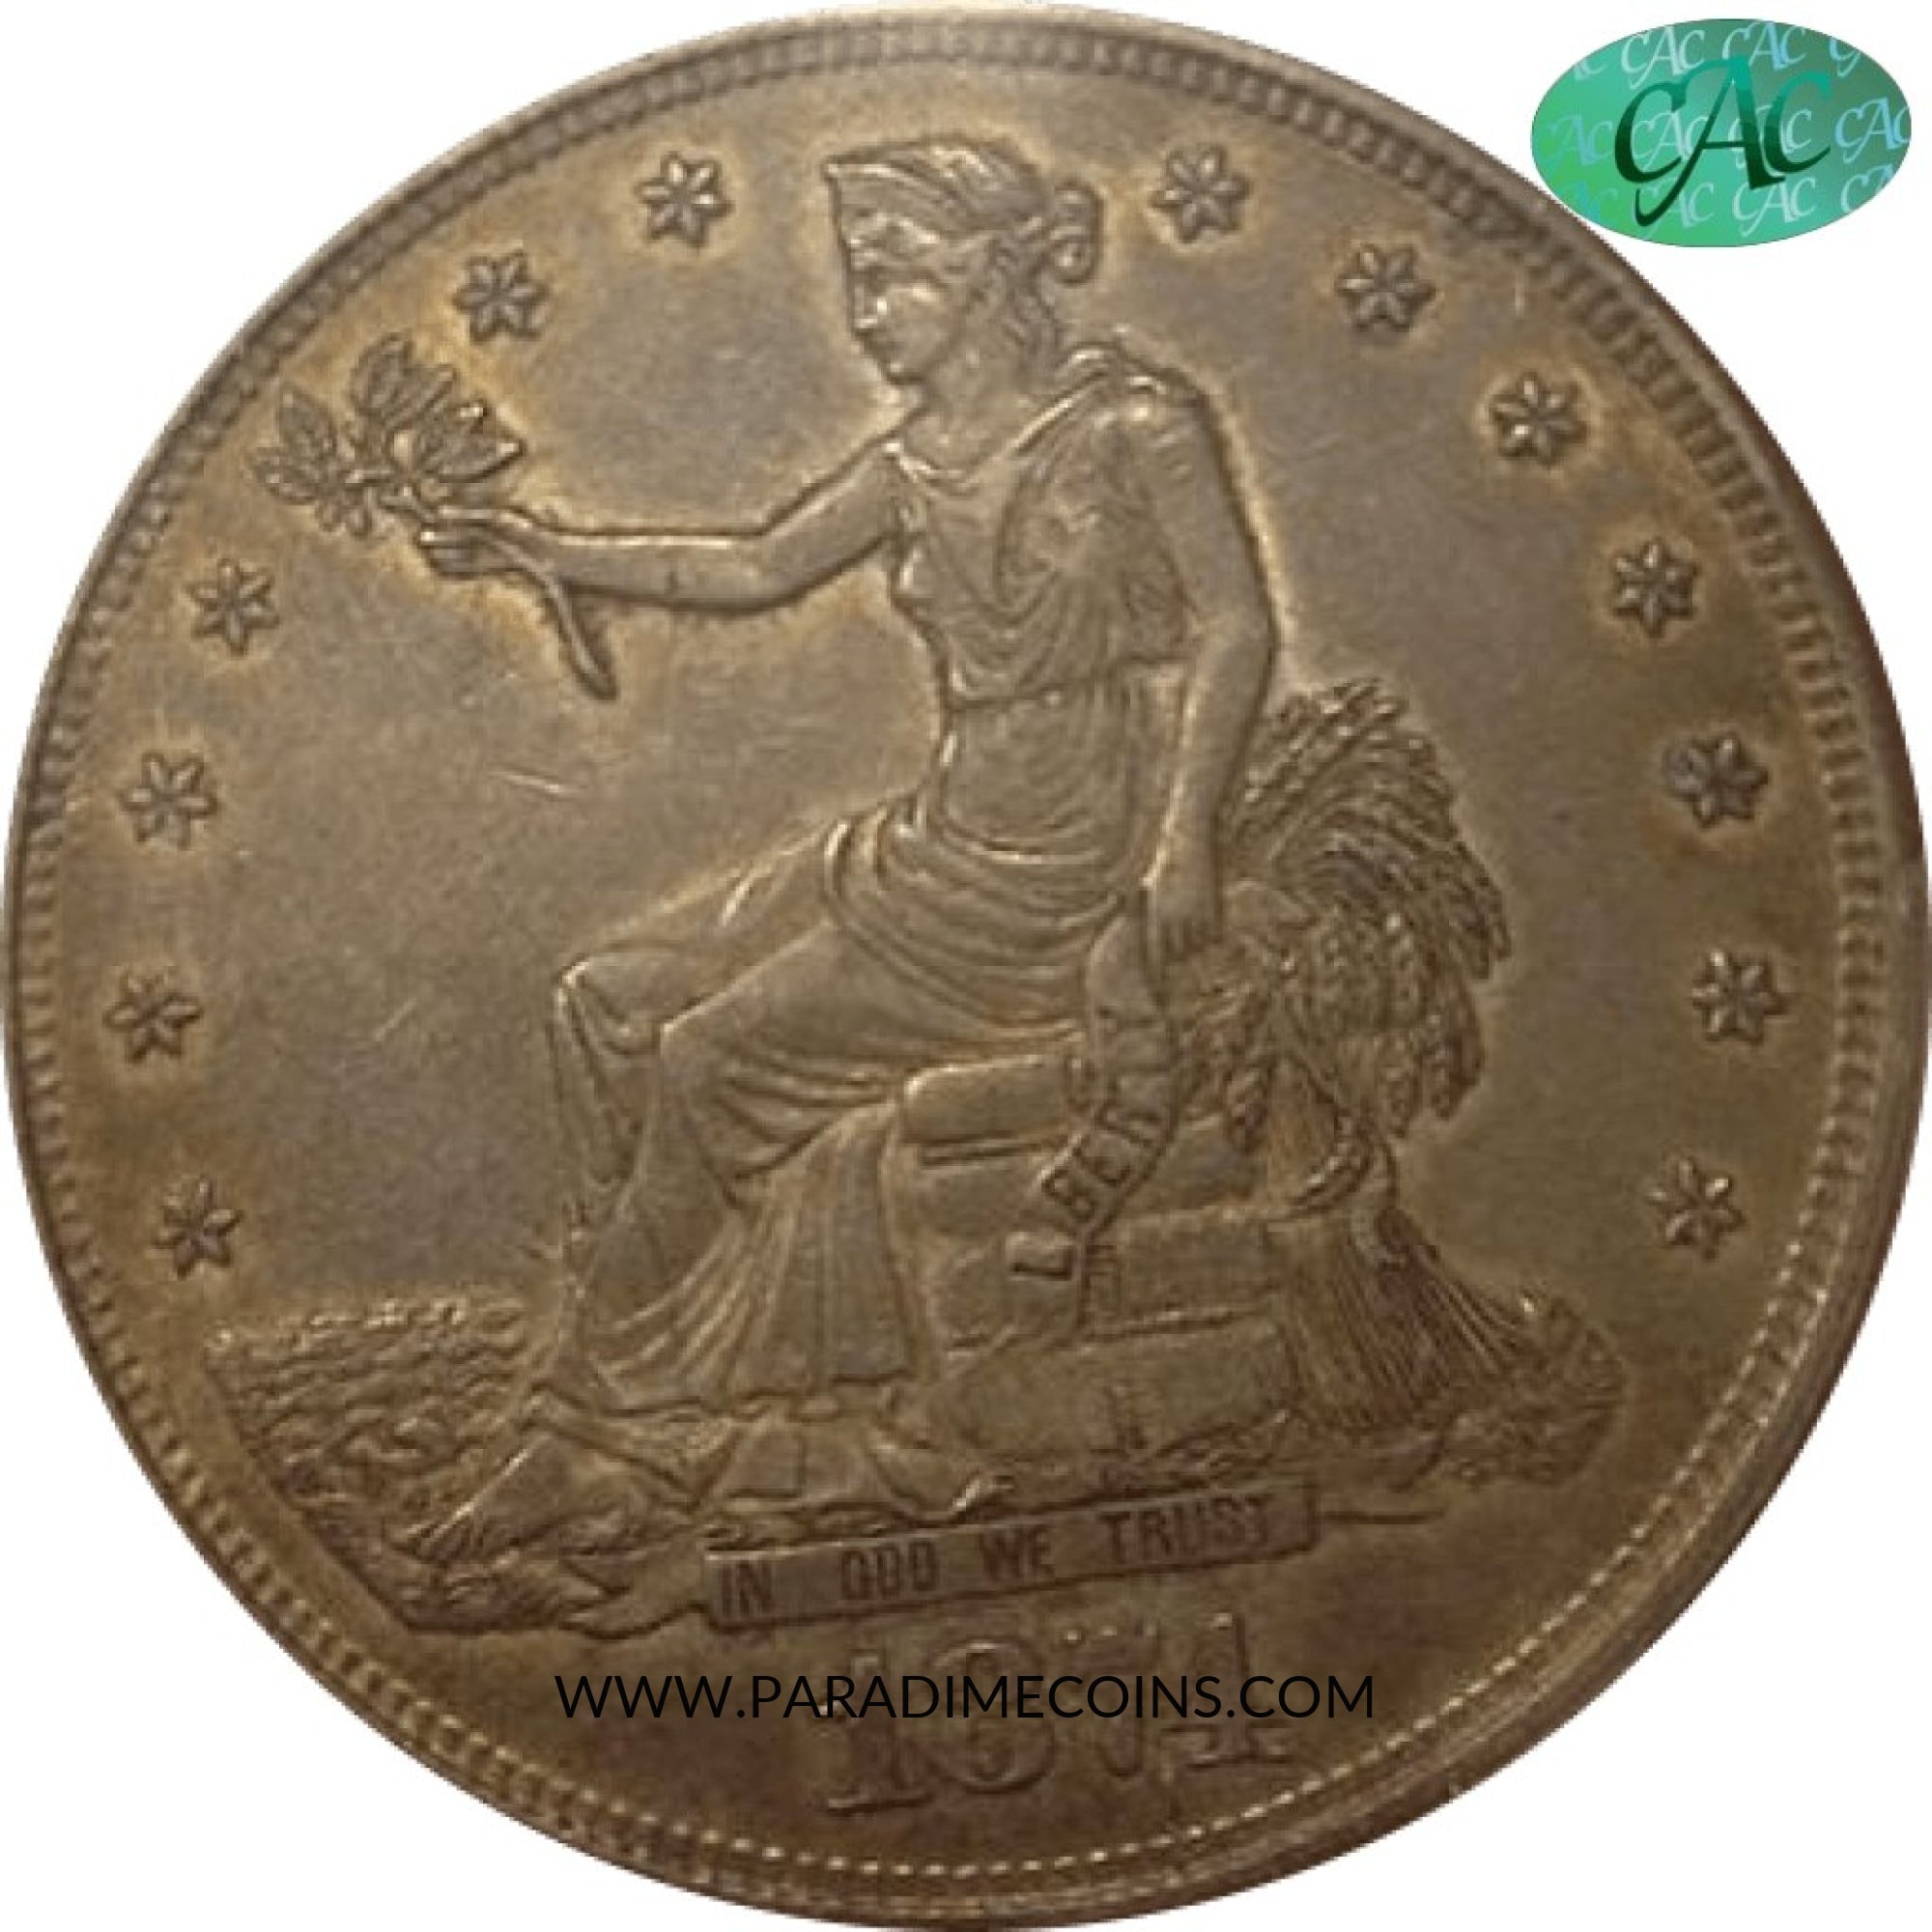 1874 T$1 AU53 PCGS CAC - Paradime Coins | PCGS NGC CACG CAC Rare US Numismatic Coins For Sale